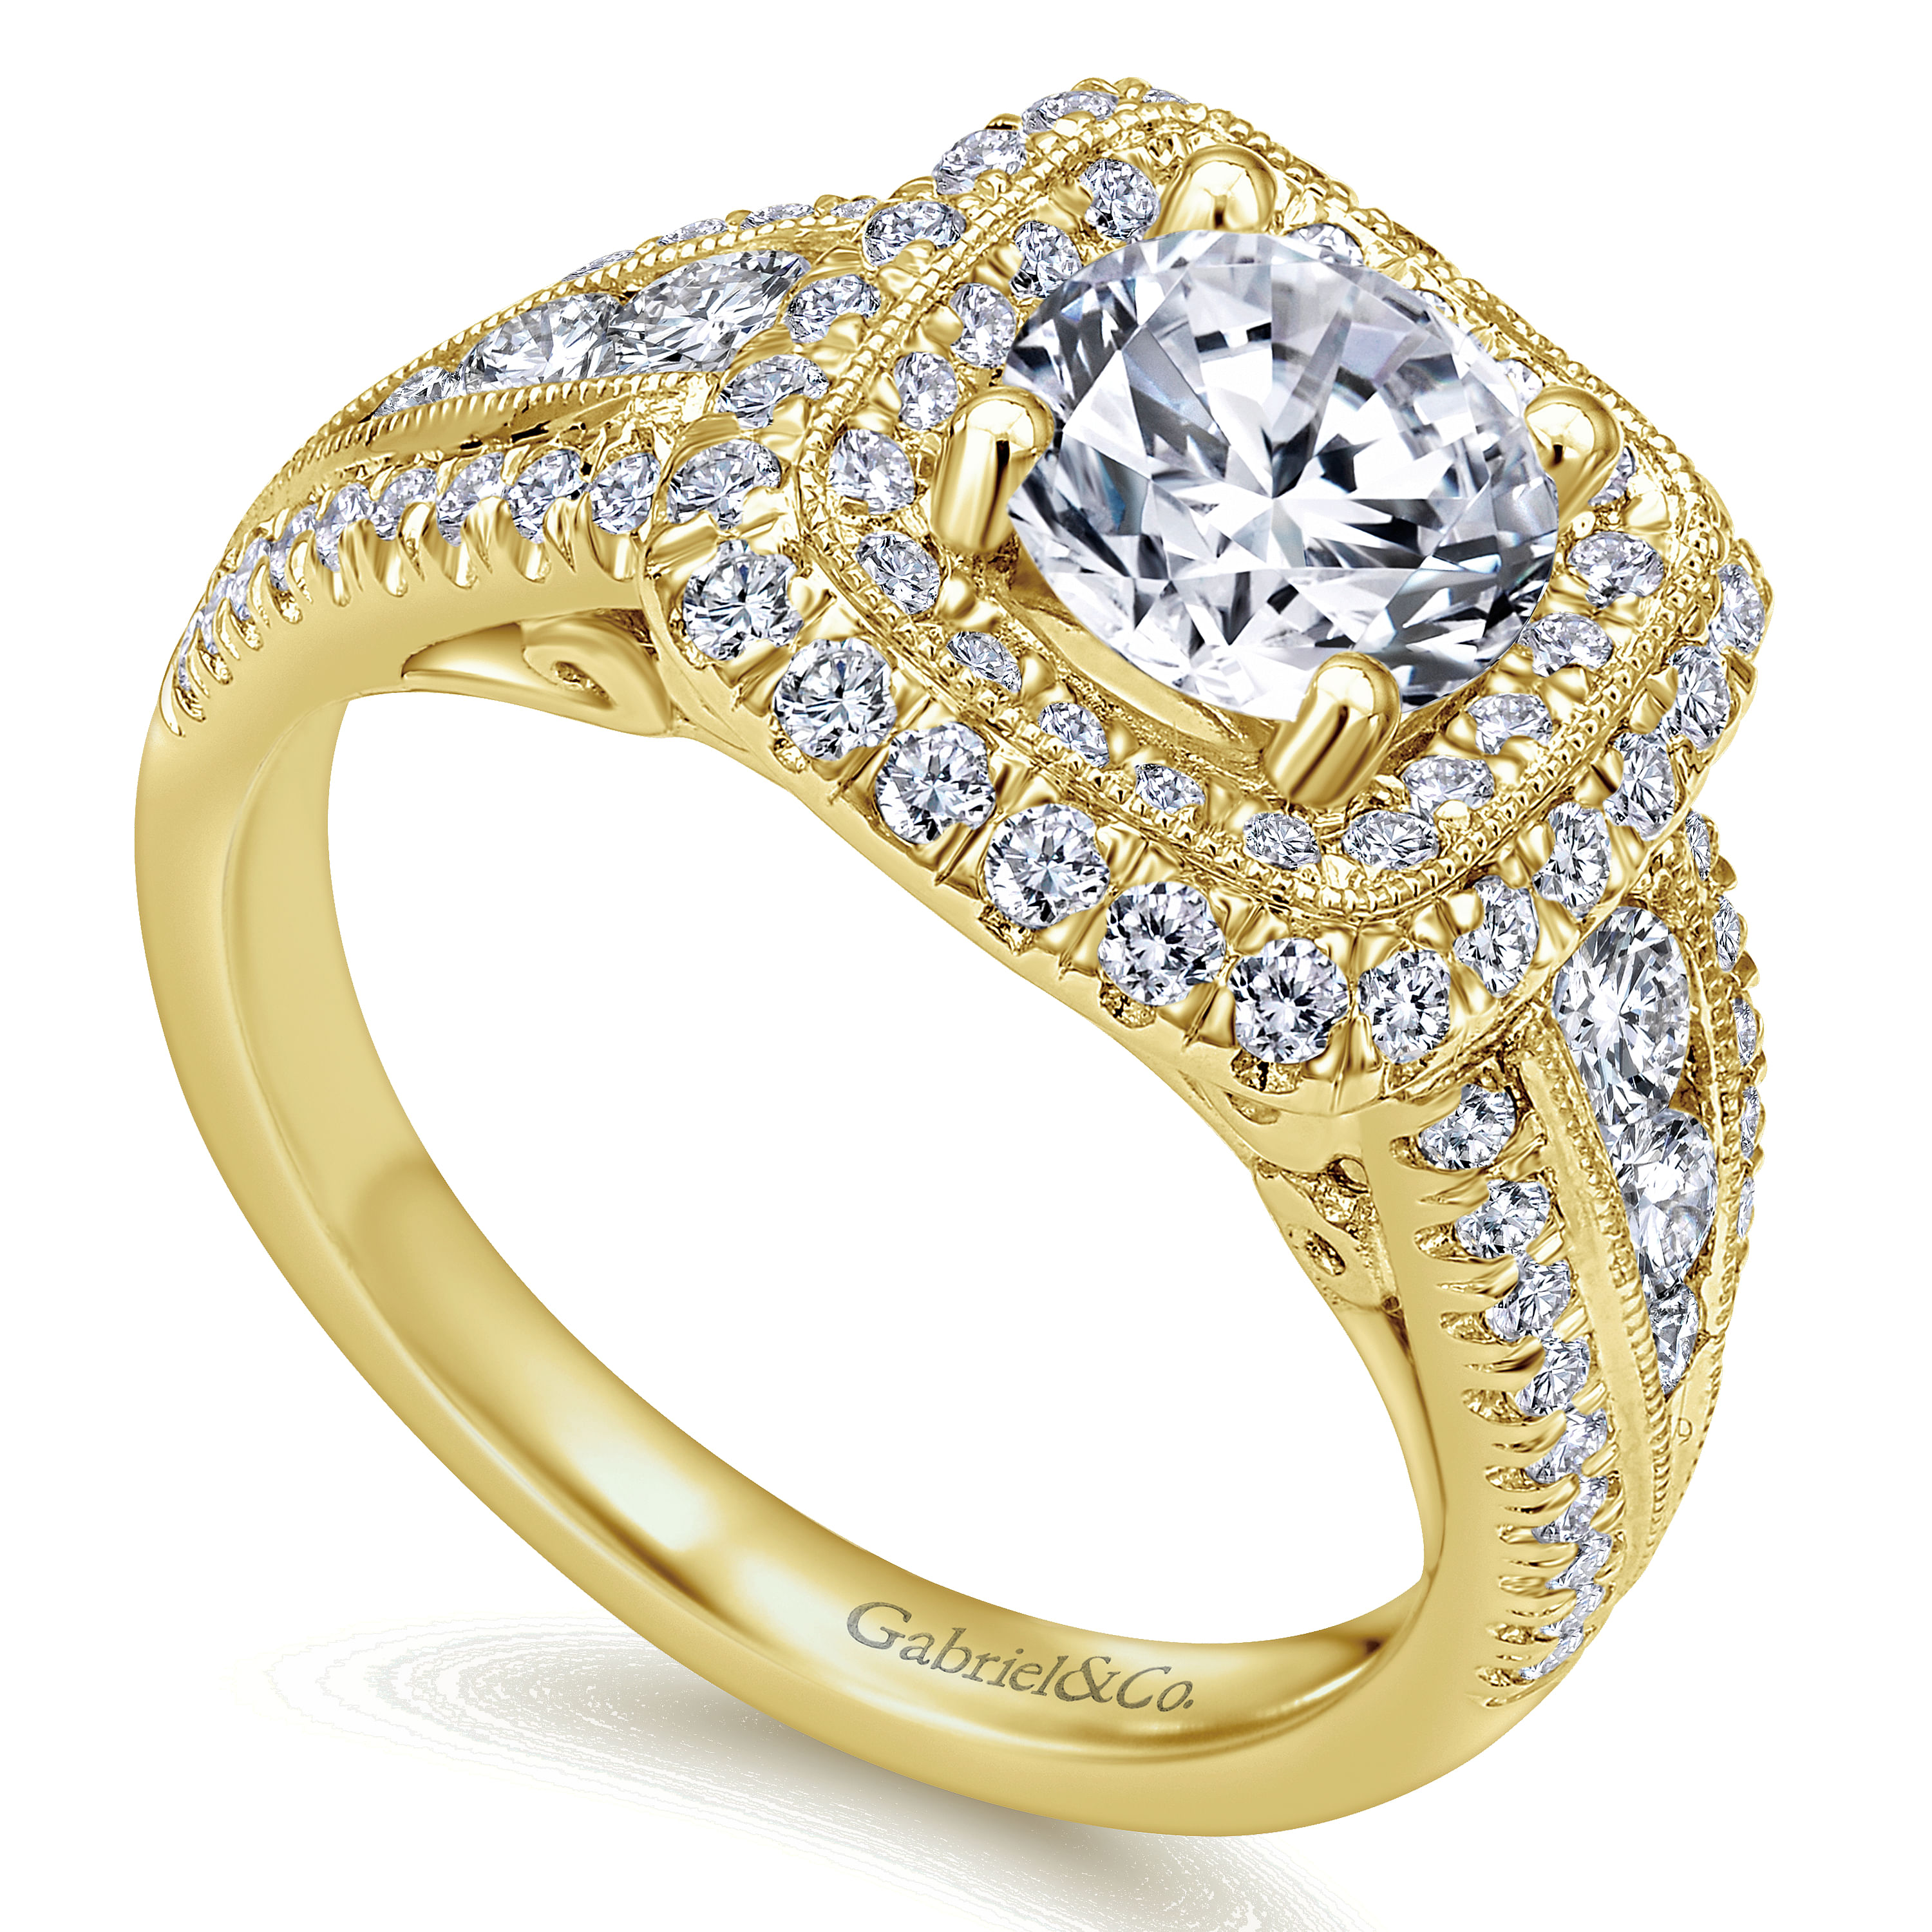 Vintage Inspired 14K Yellow Gold Cushion Double Halo Round Diamond Engagement Ring